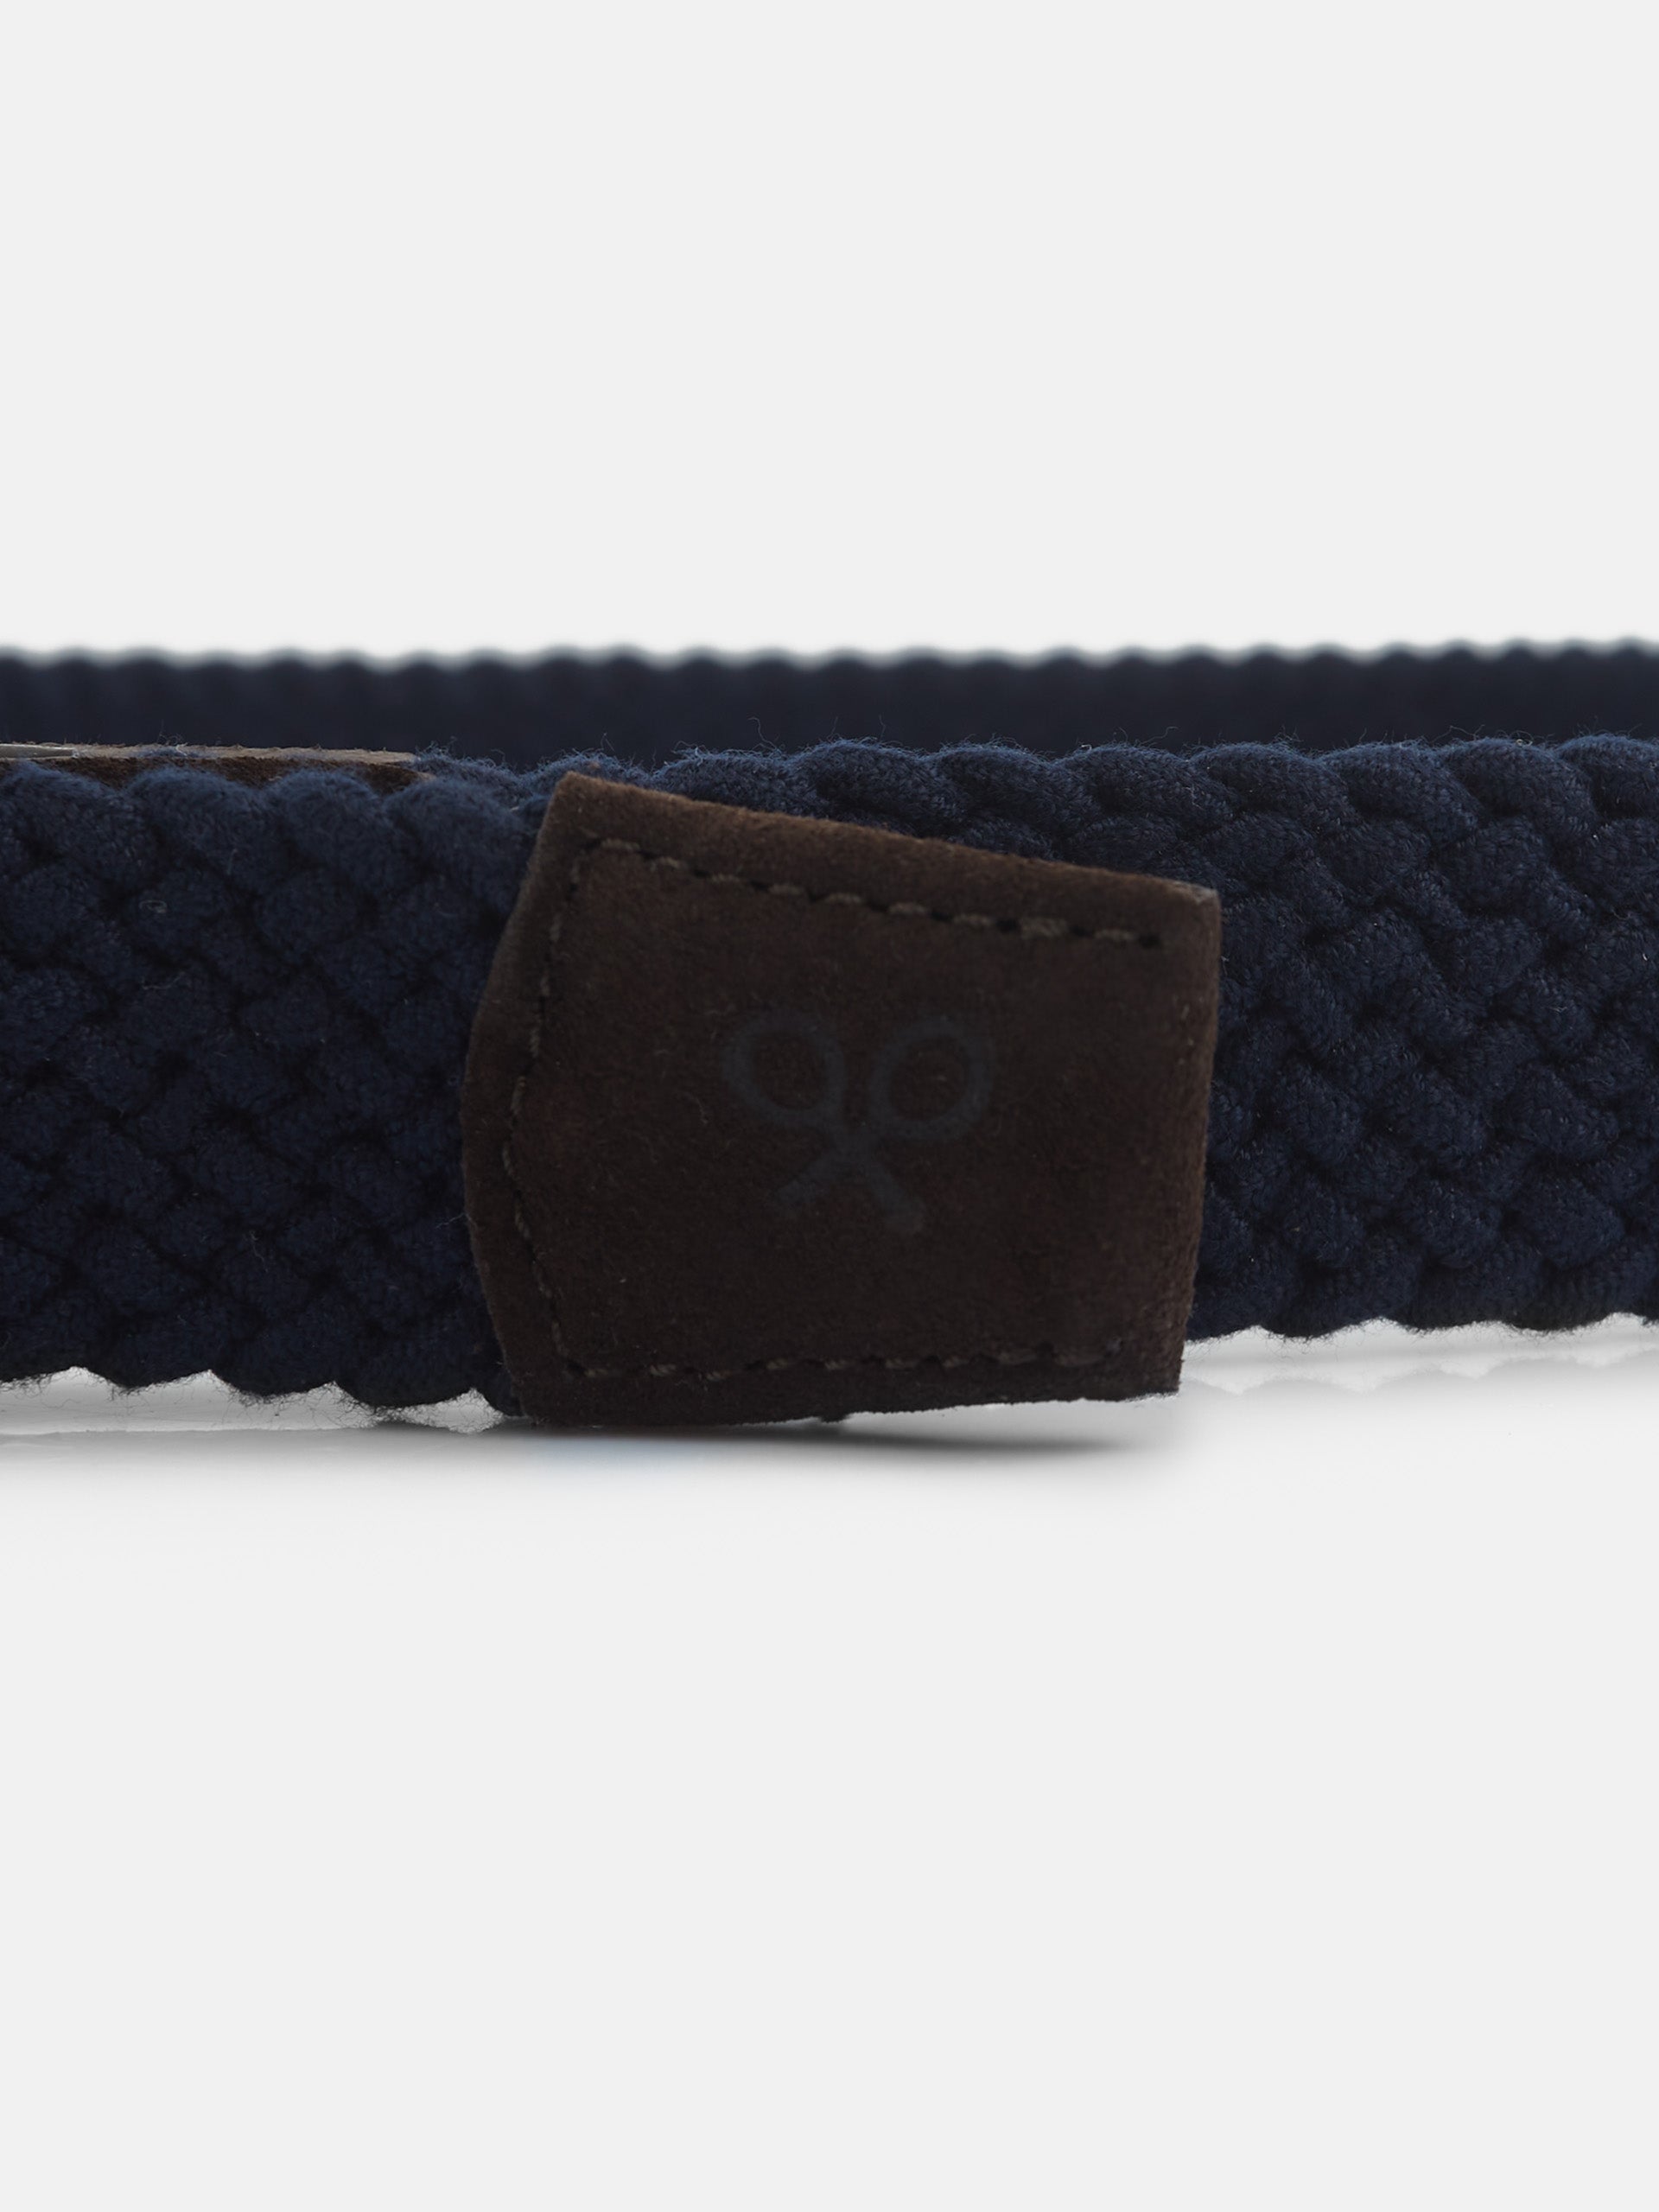 Cinturon elastico trenzado azul